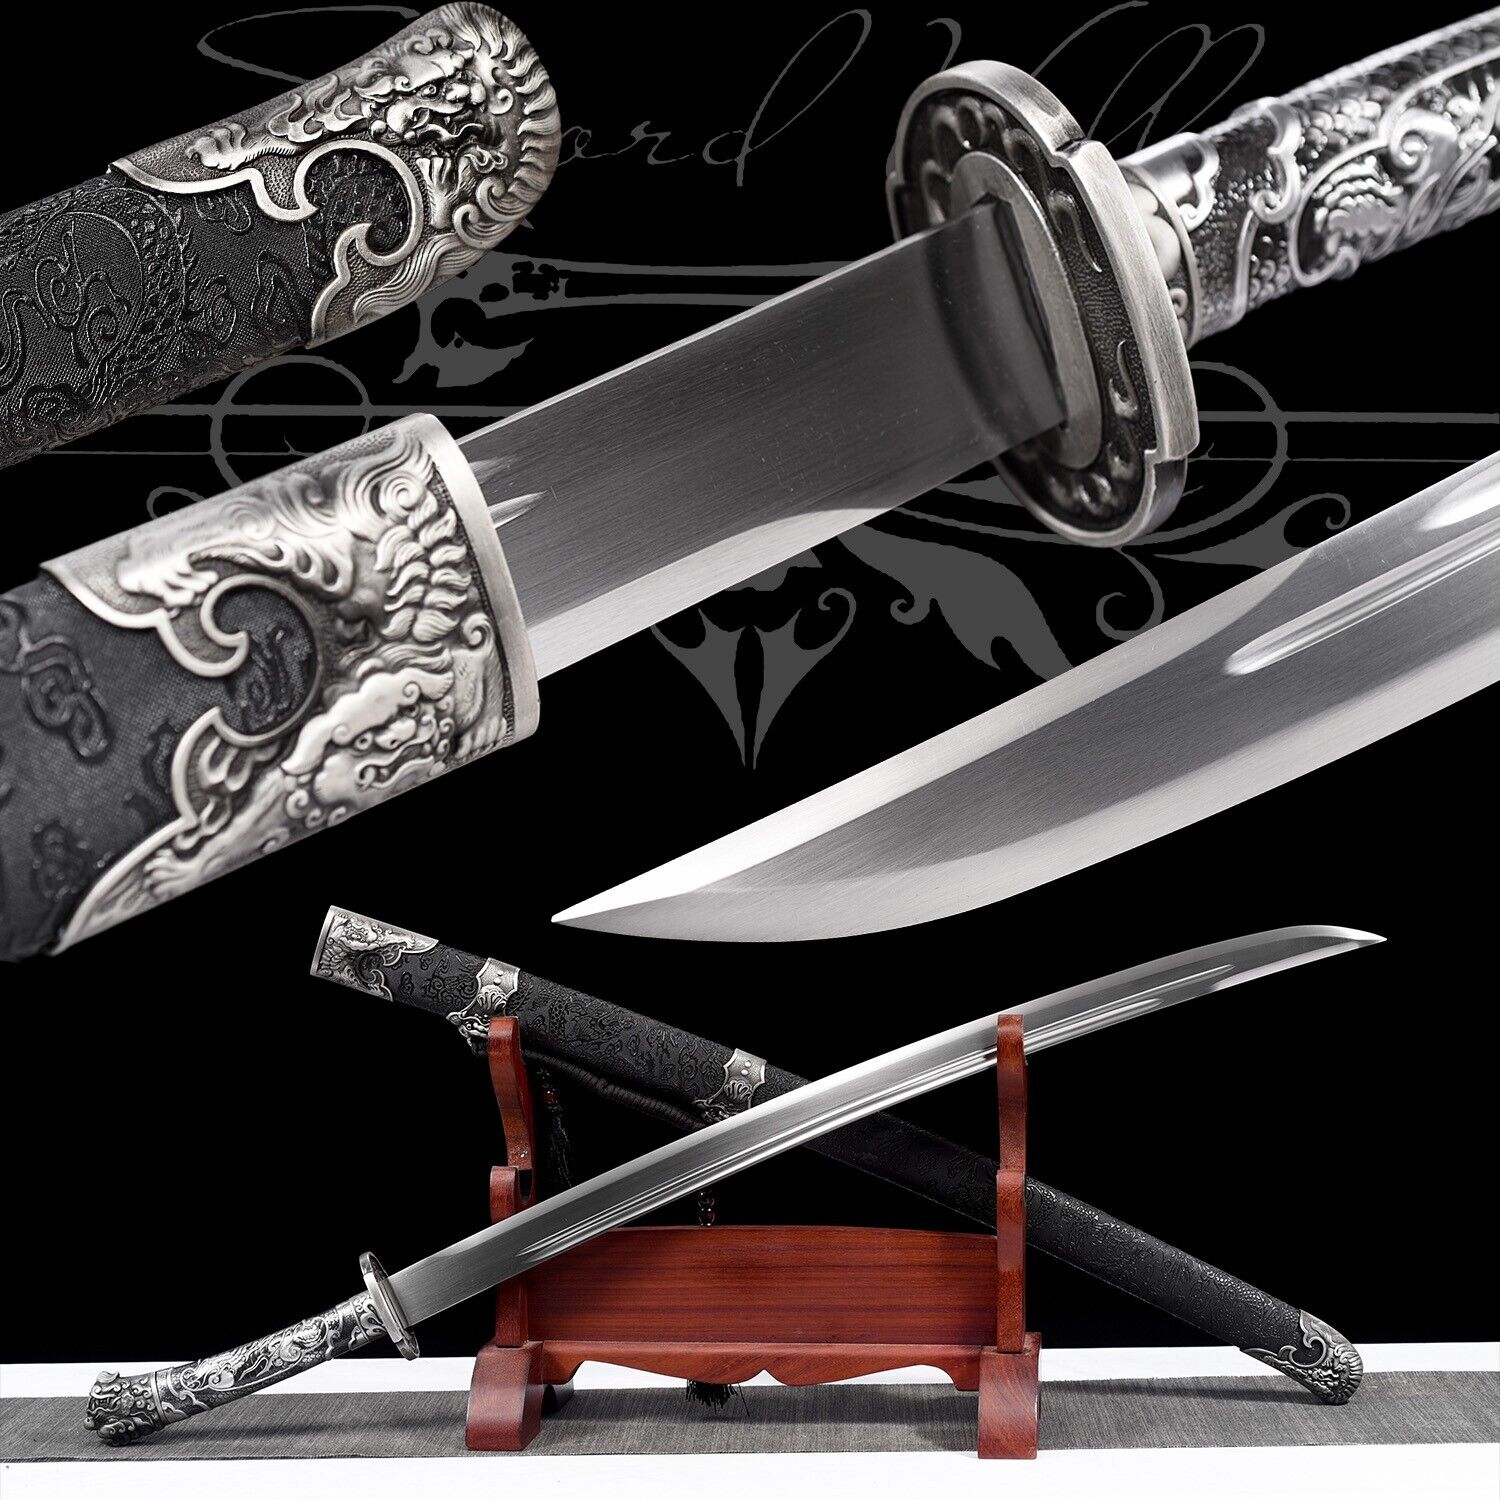 100cm Handmade Katana/High Manganese Steel/Real Samurai Sword/Full Tang/Weapon